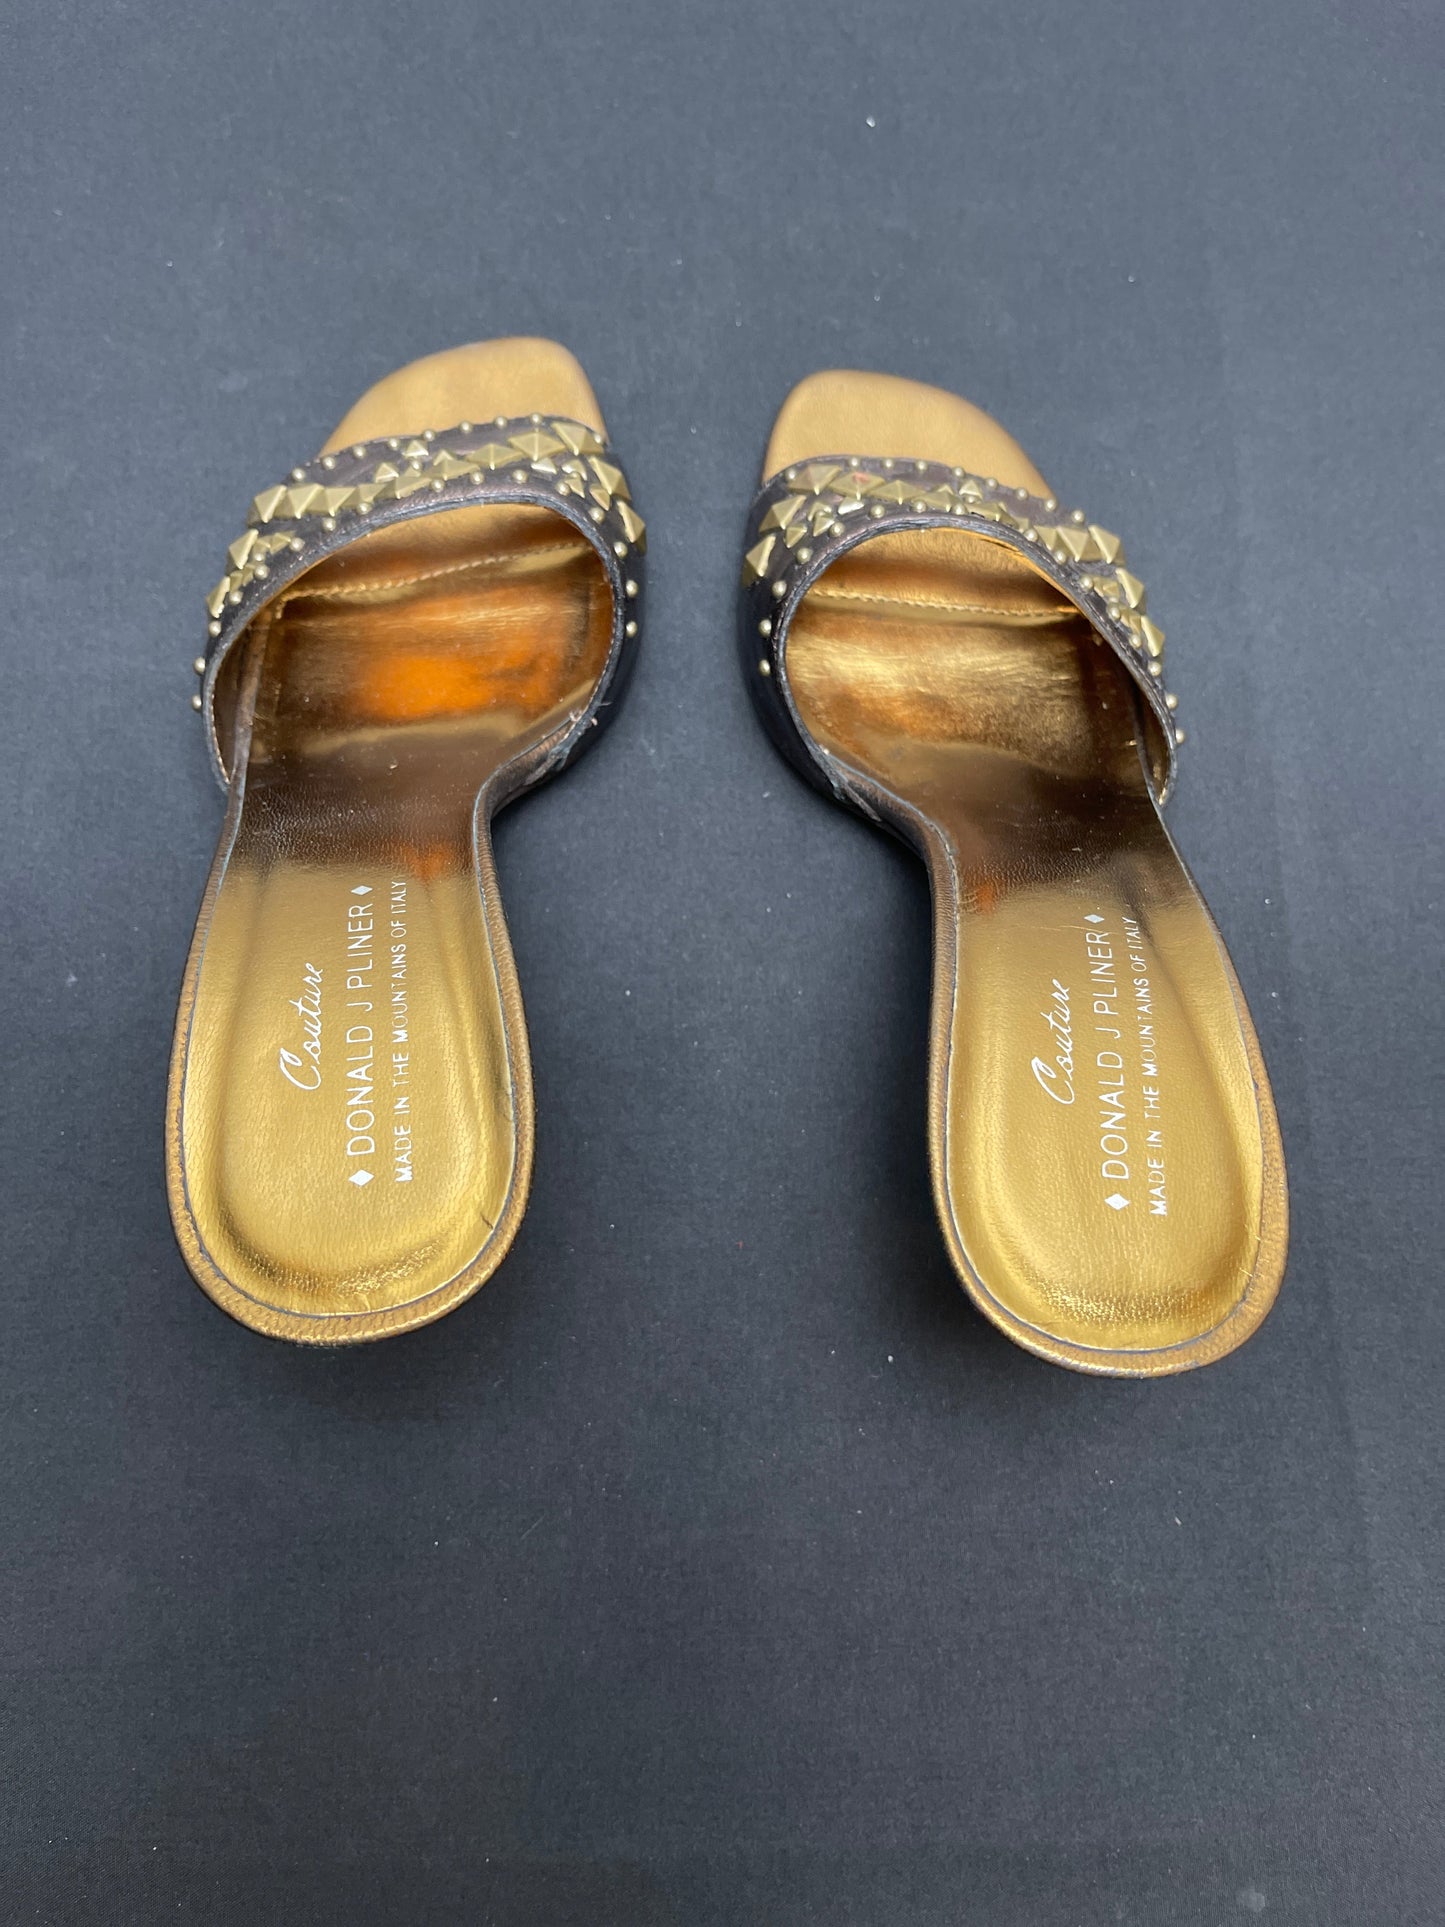 Sandals Heels Stiletto By Donald Pliner  Size: 8